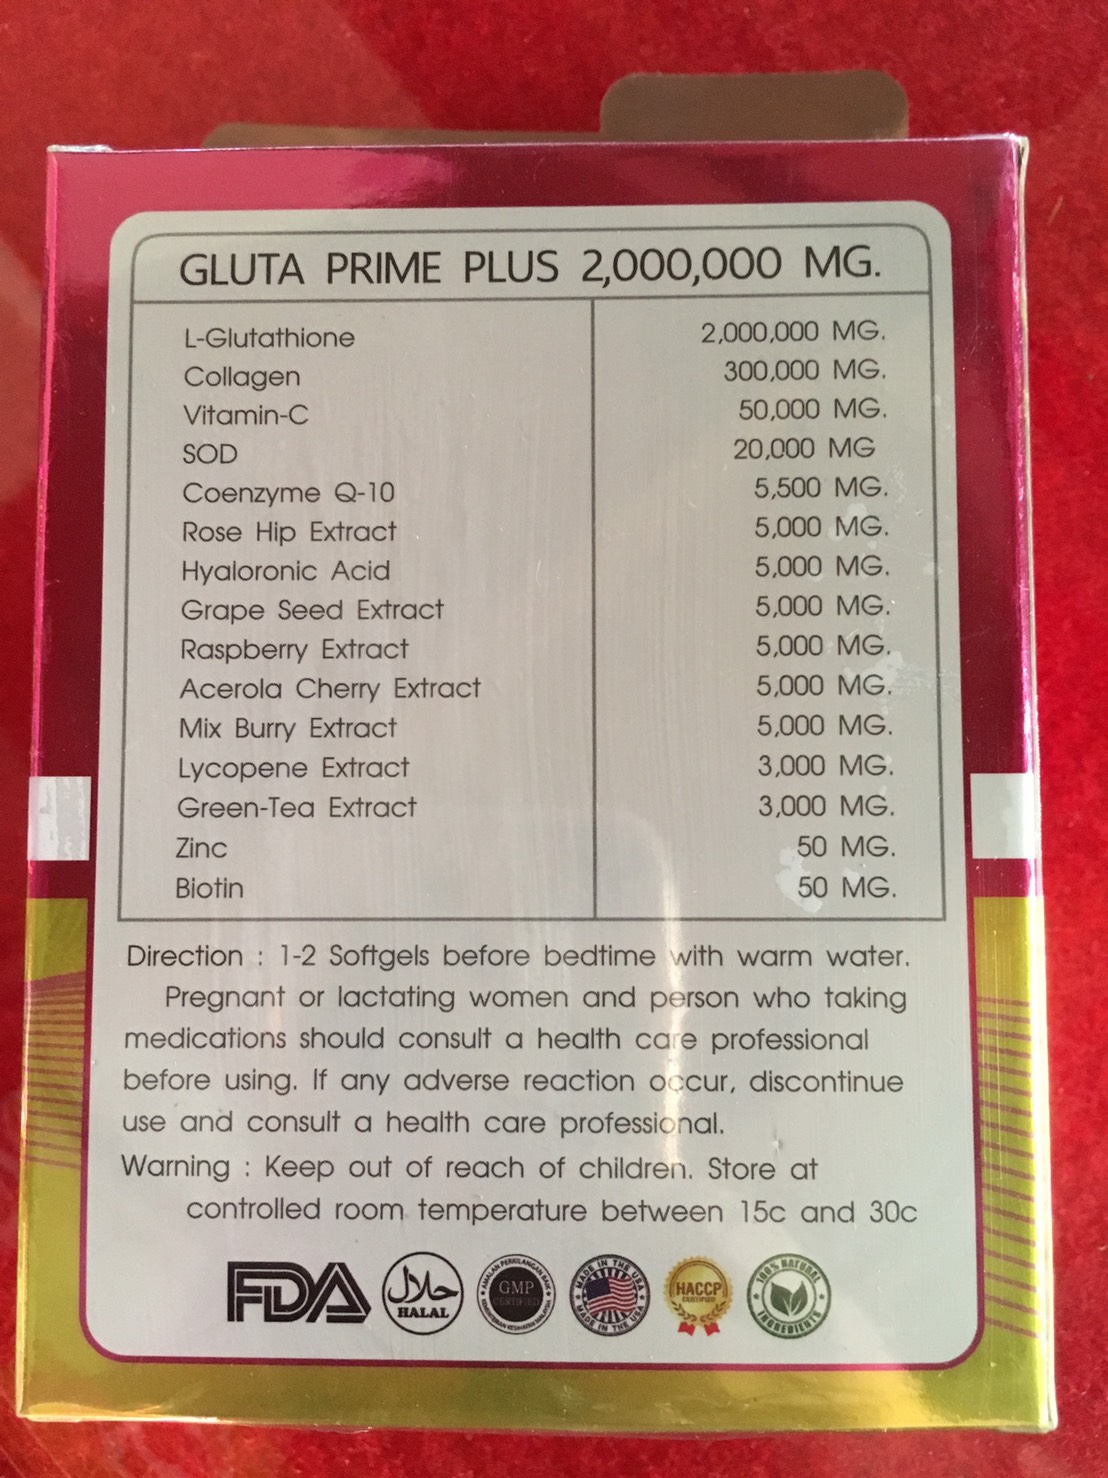 Gluta Prime Plus New Box by www.ccthaitown.com